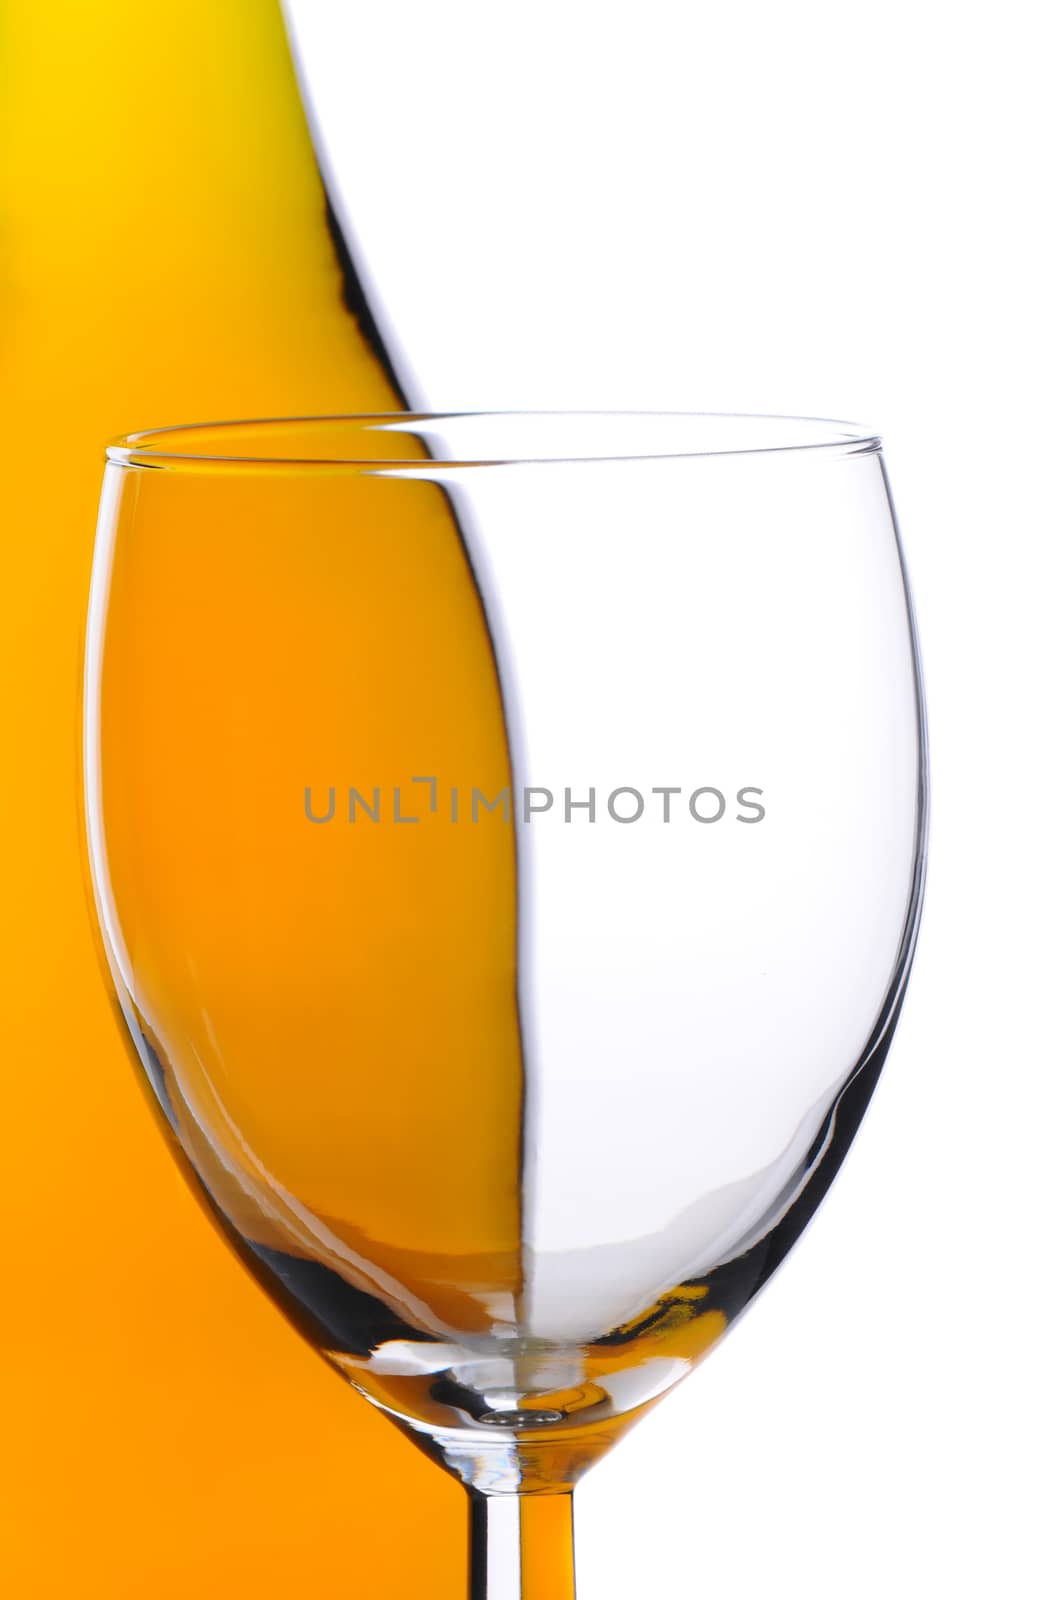 Wine glass in front of bottle by sCukrov